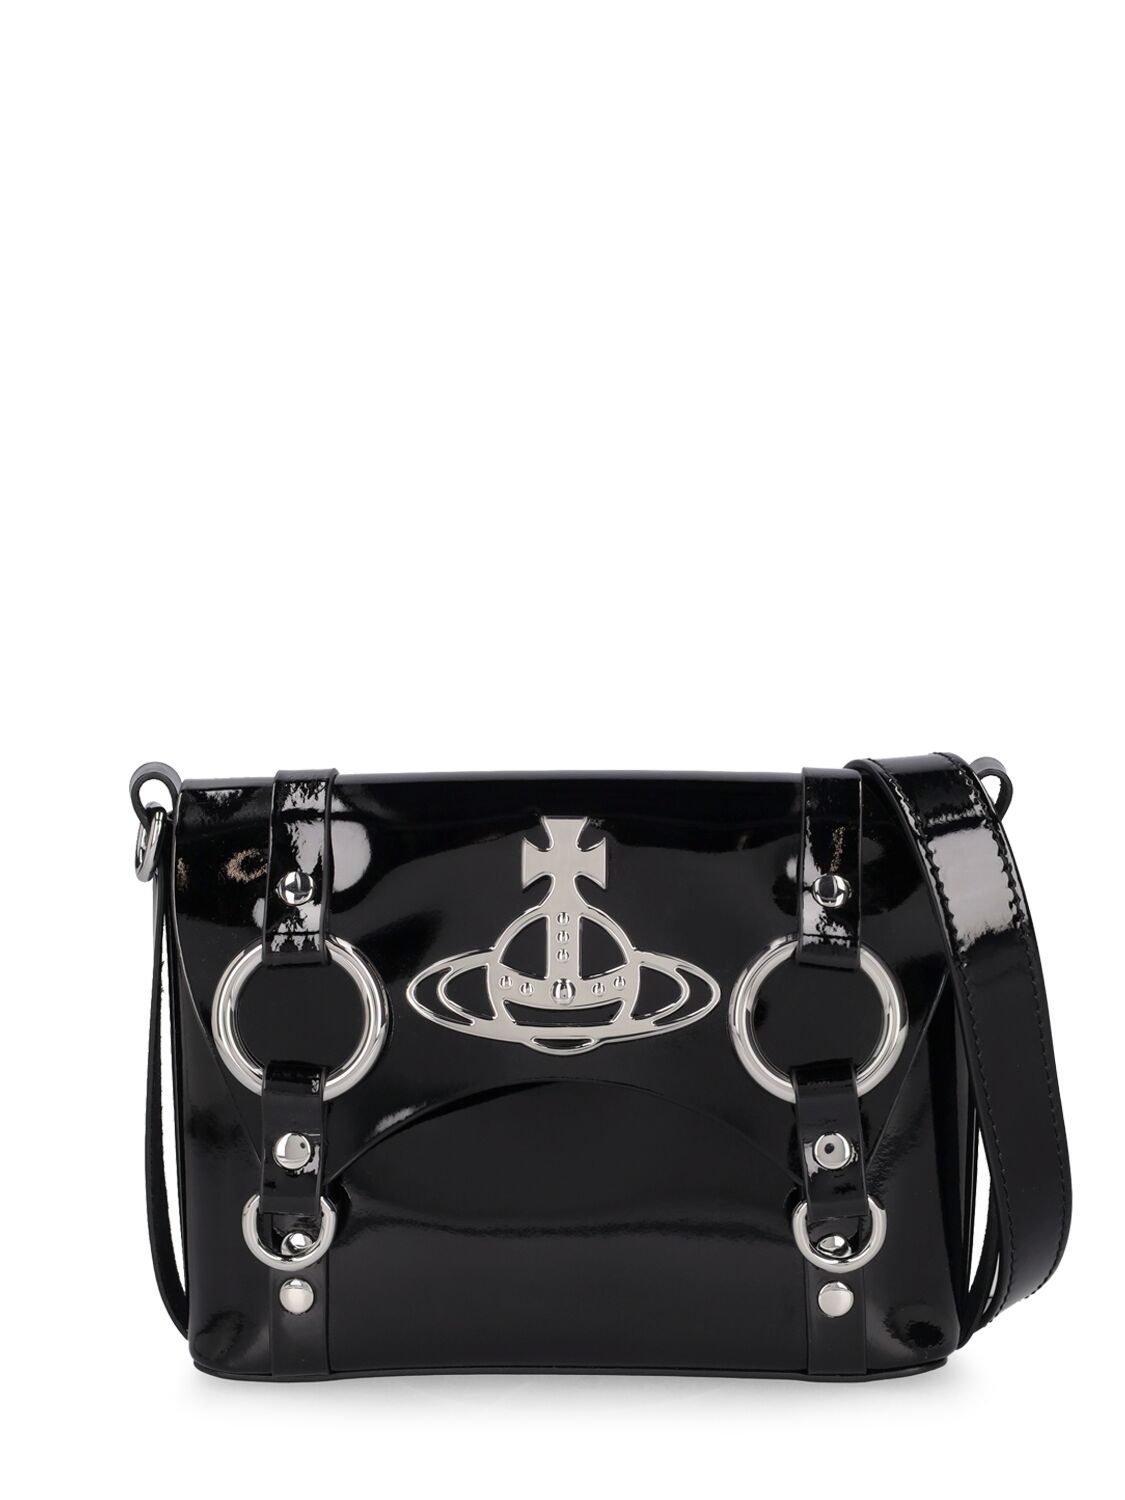 Vivienne Westwood Kim Patent Leather Crossbody Bag In Black